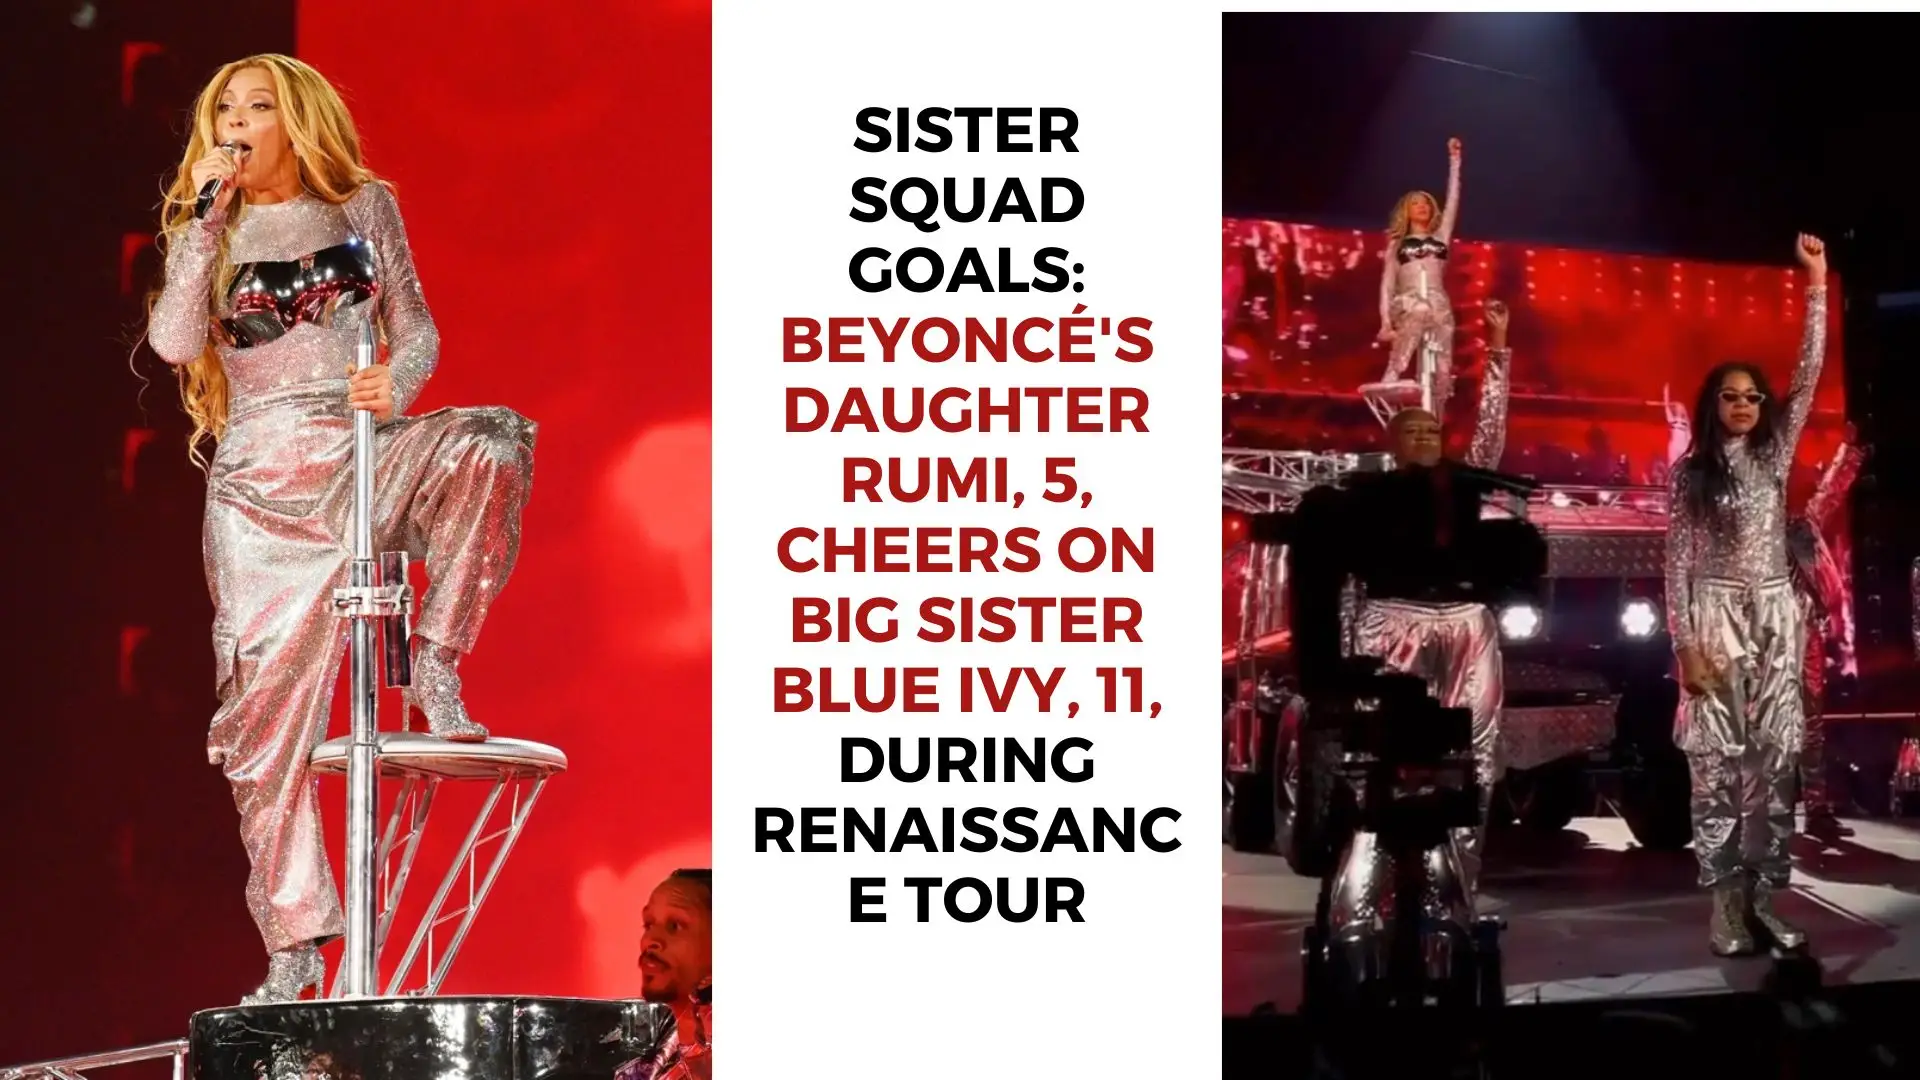 Sister Squad Goals: Beyoncé's Daughter Rumi, 5, Cheers on Big Sister Blue Ivy, 11, During Renaissance Tour